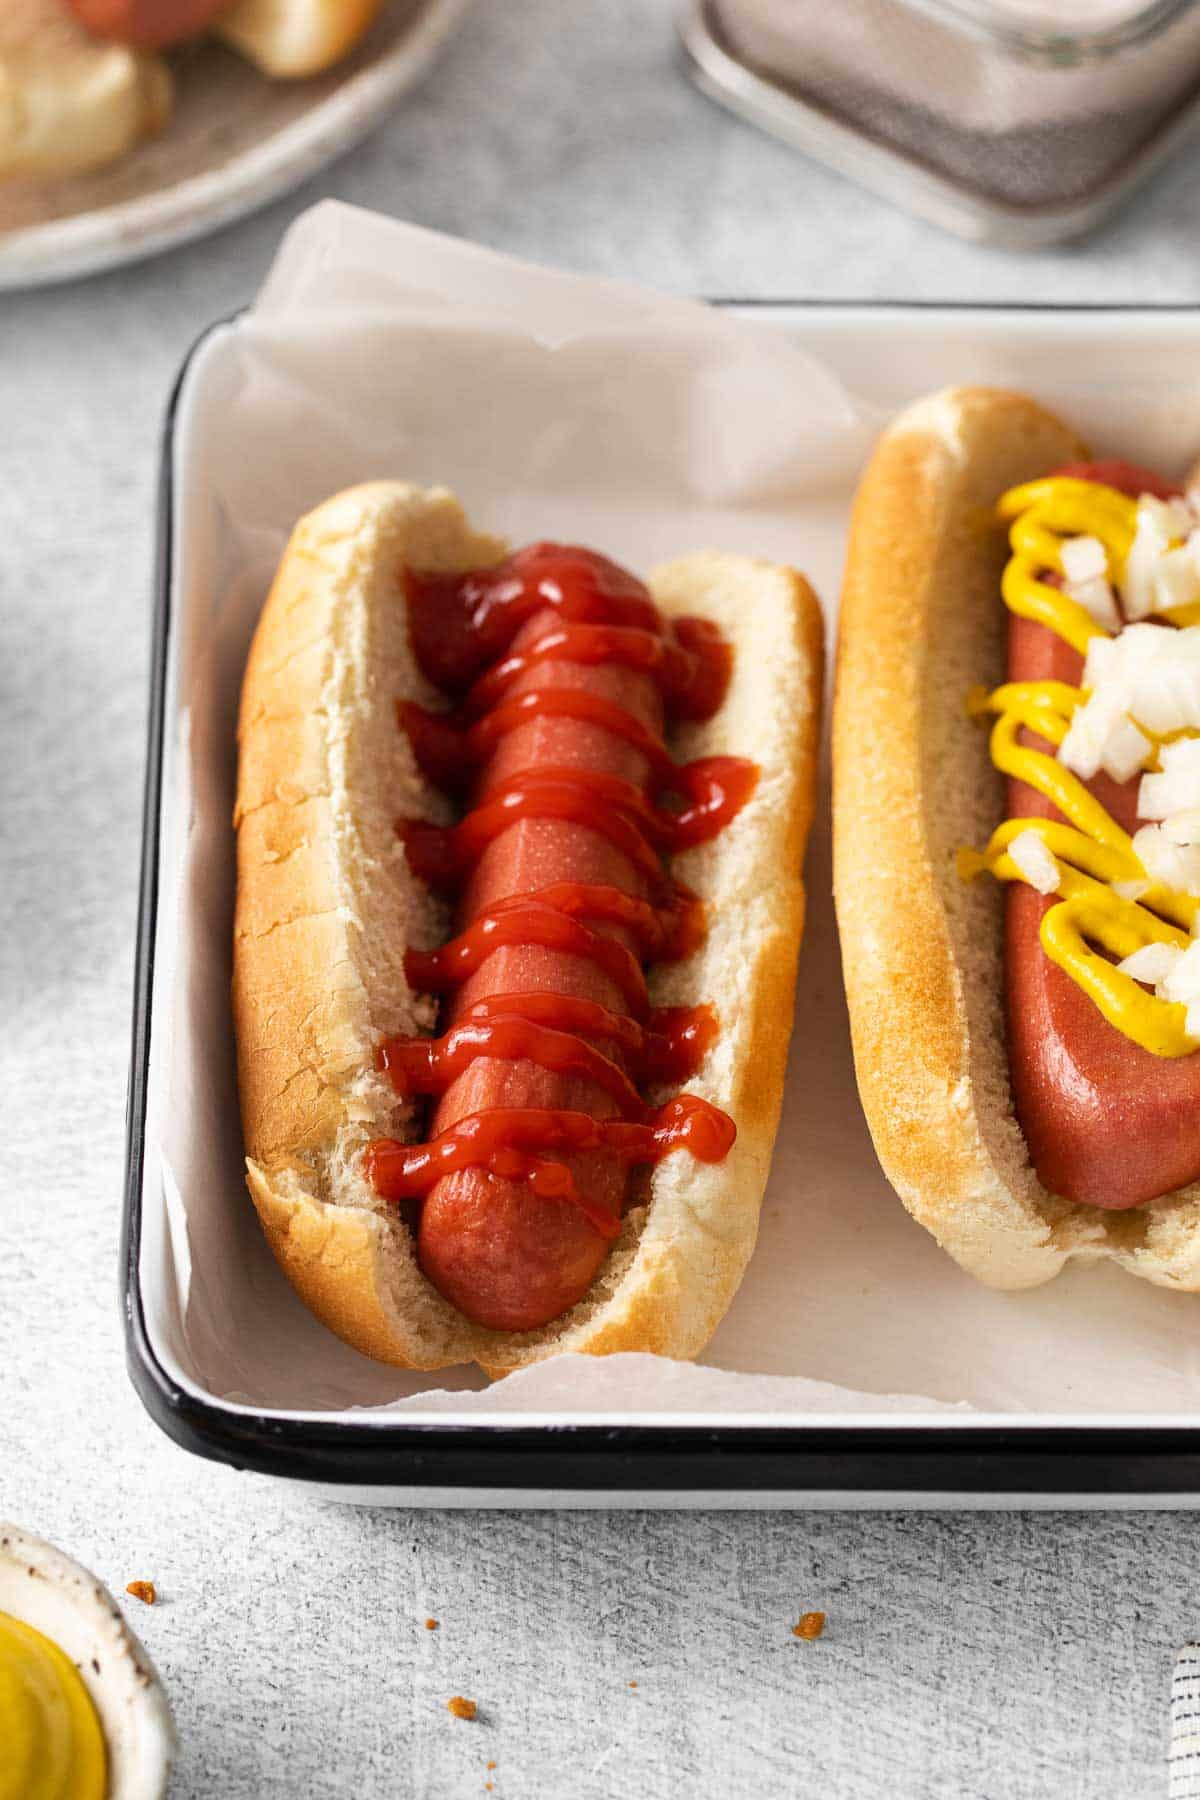 A hot dog garnished with ketchup.